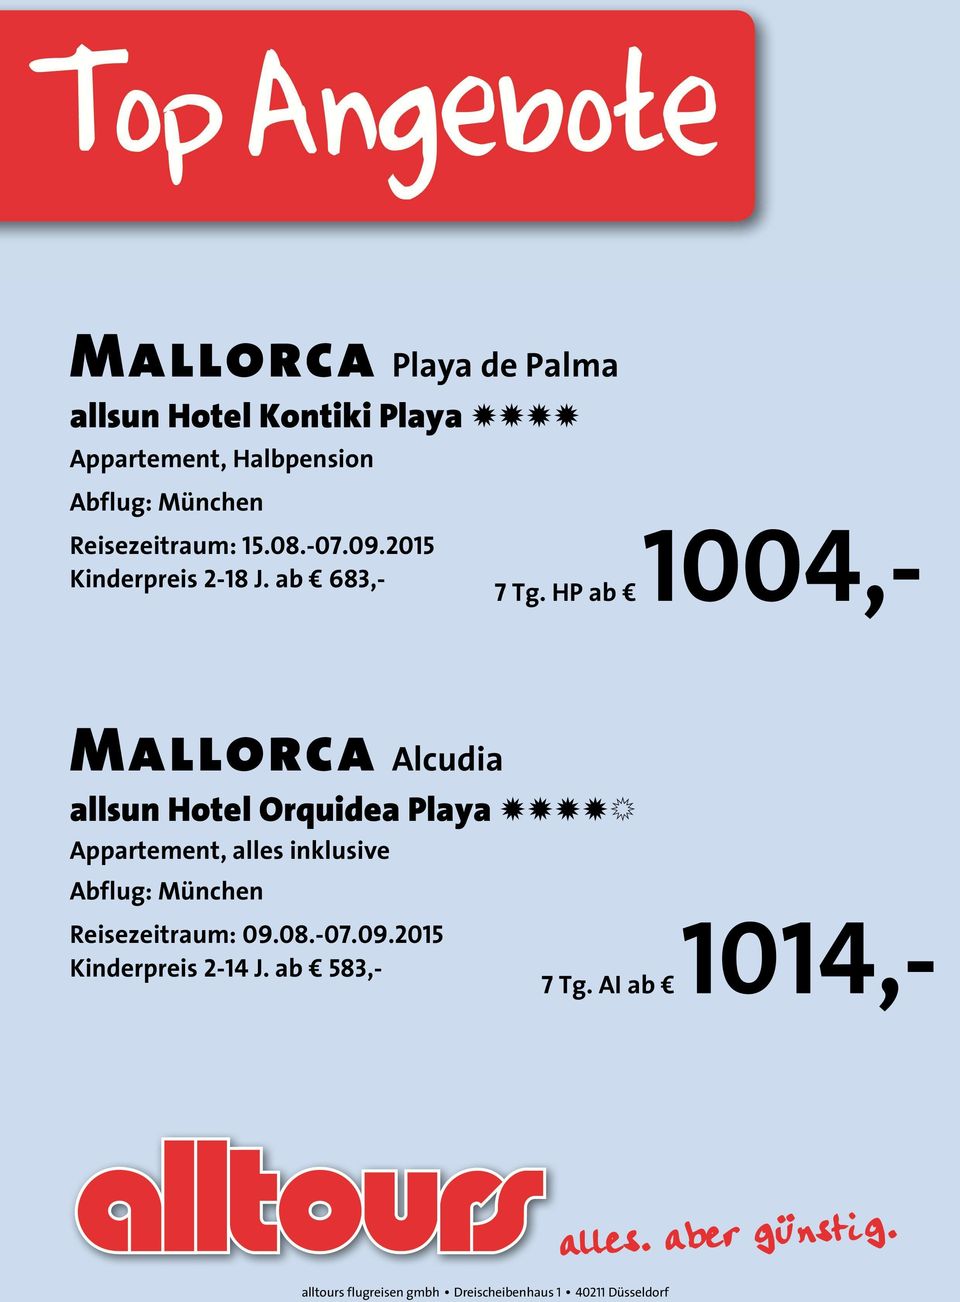 HP ab 1004,- Mallorca Alcudia allsun Hotel Orquidea Playa NNNNn Appartement,